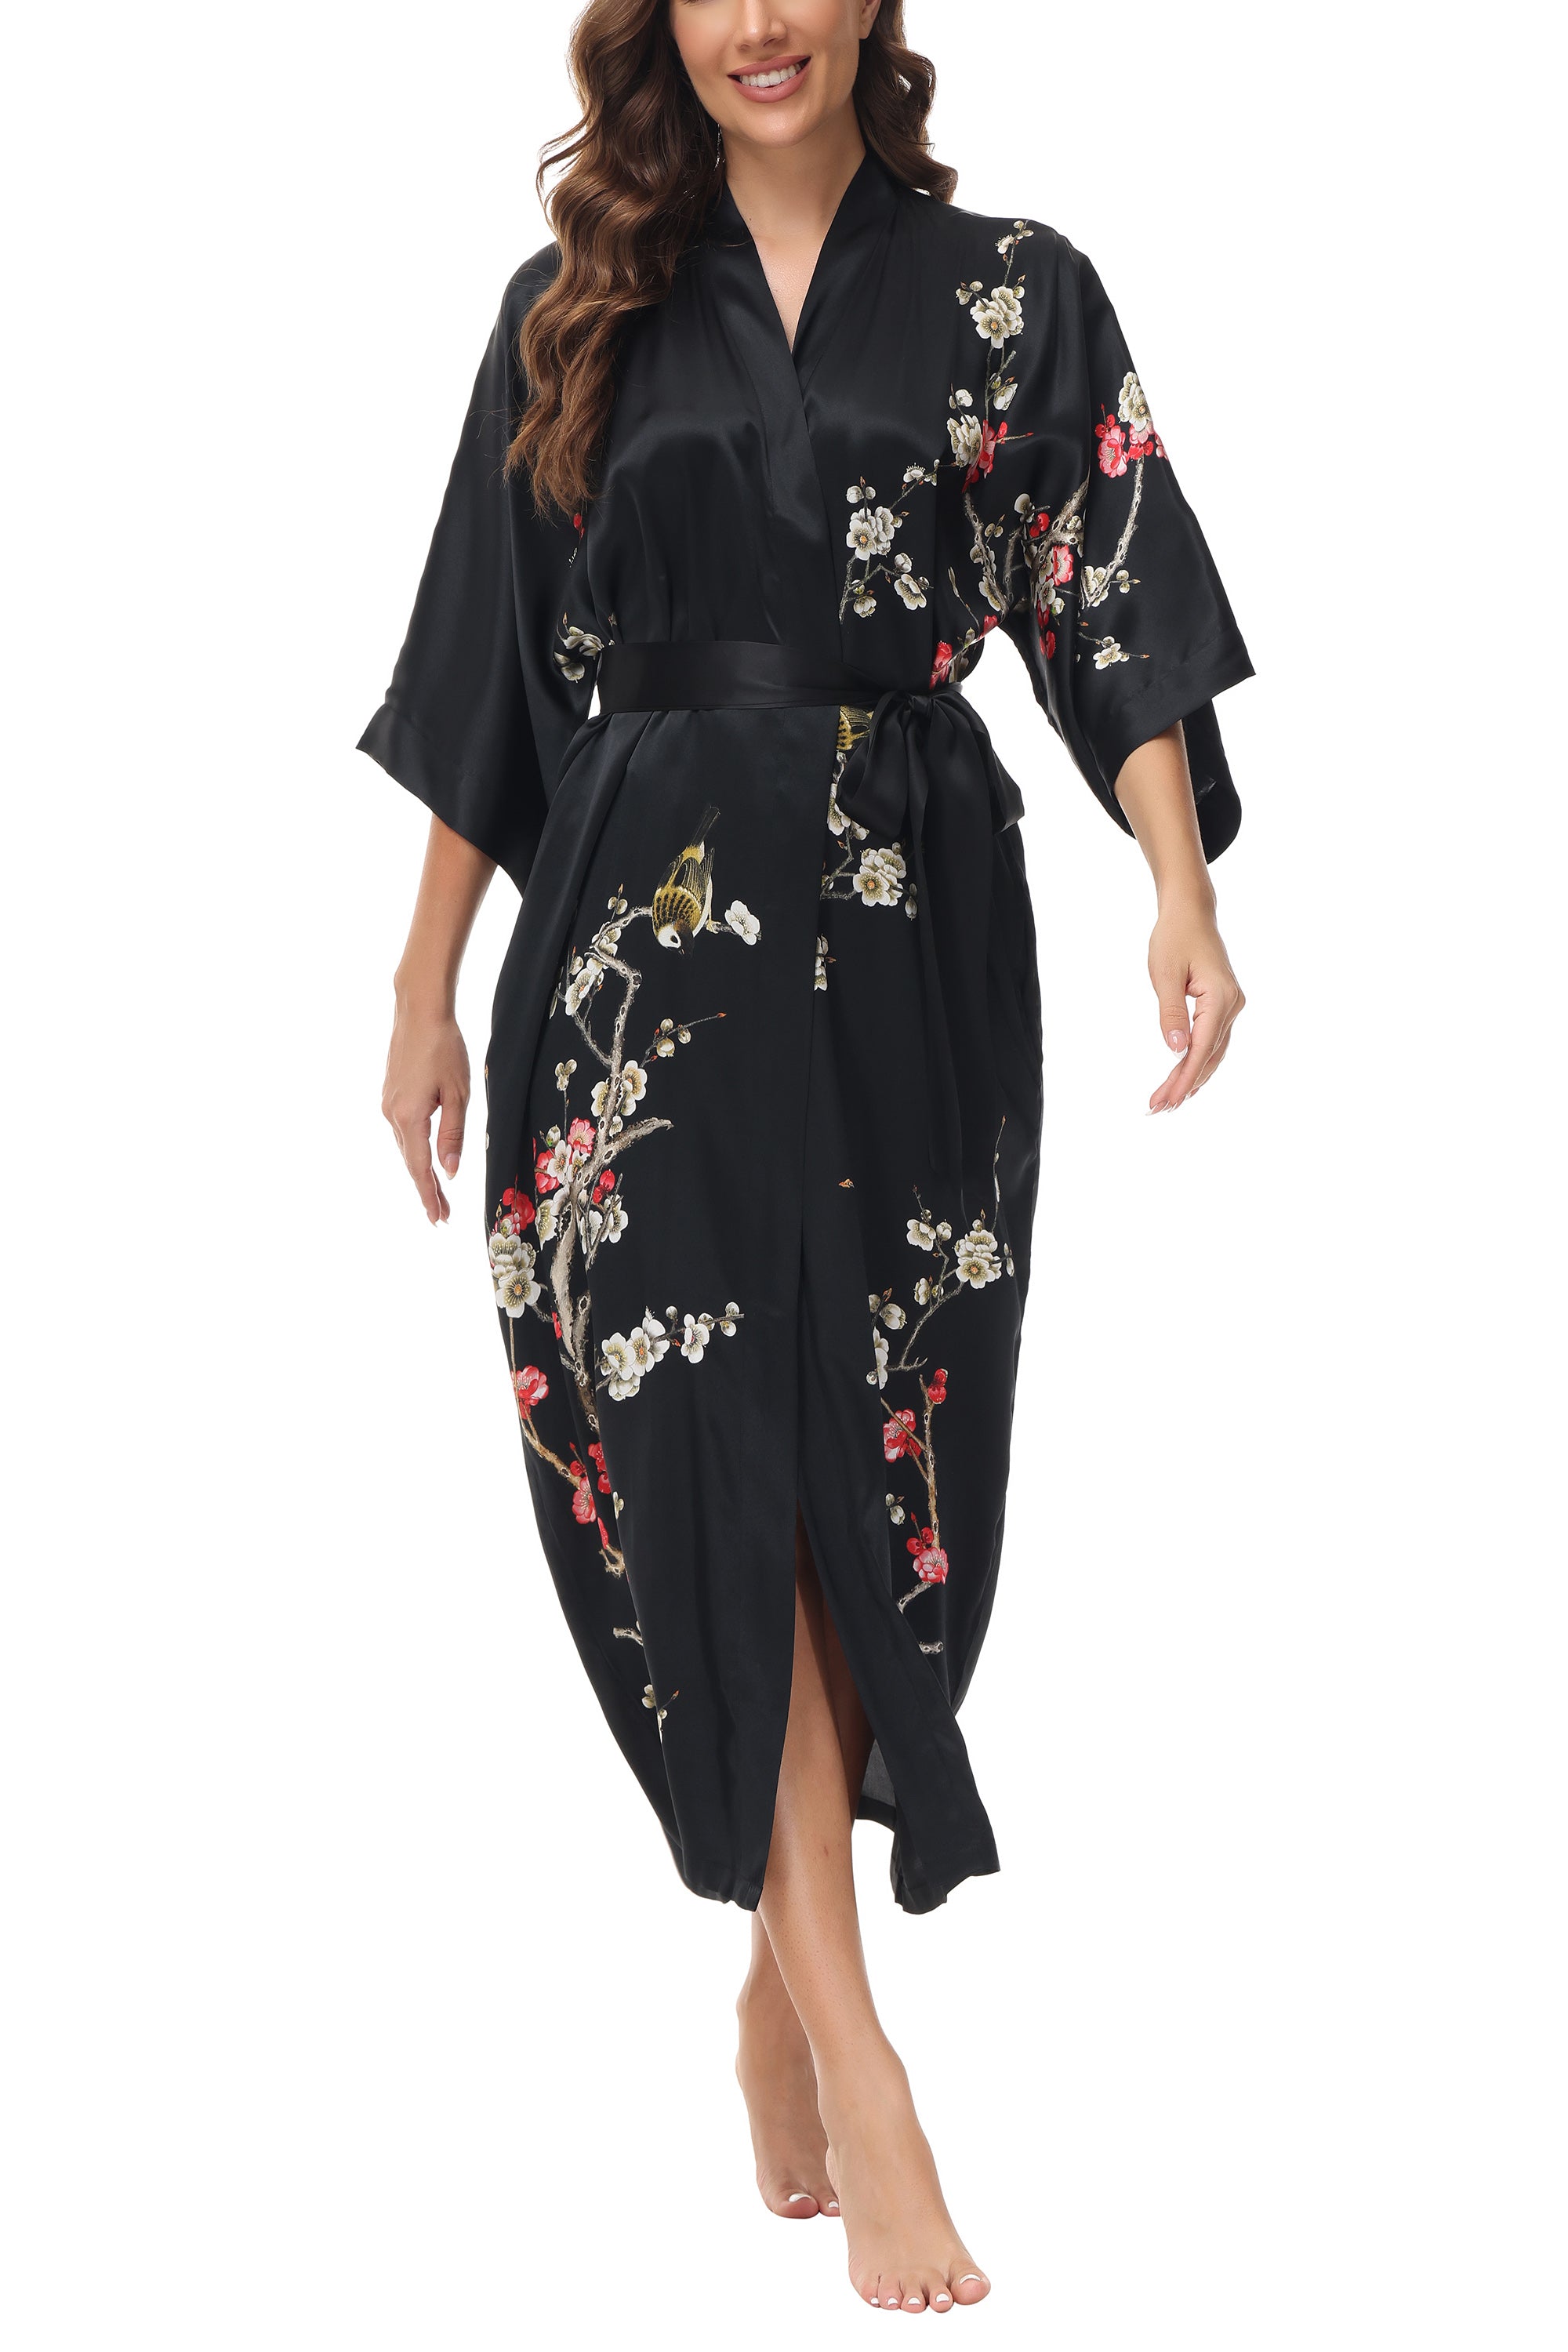 OSCAR ROSSA Women's Silk Sleepwear 100% Silk Charmeuse Long Robe Kimono